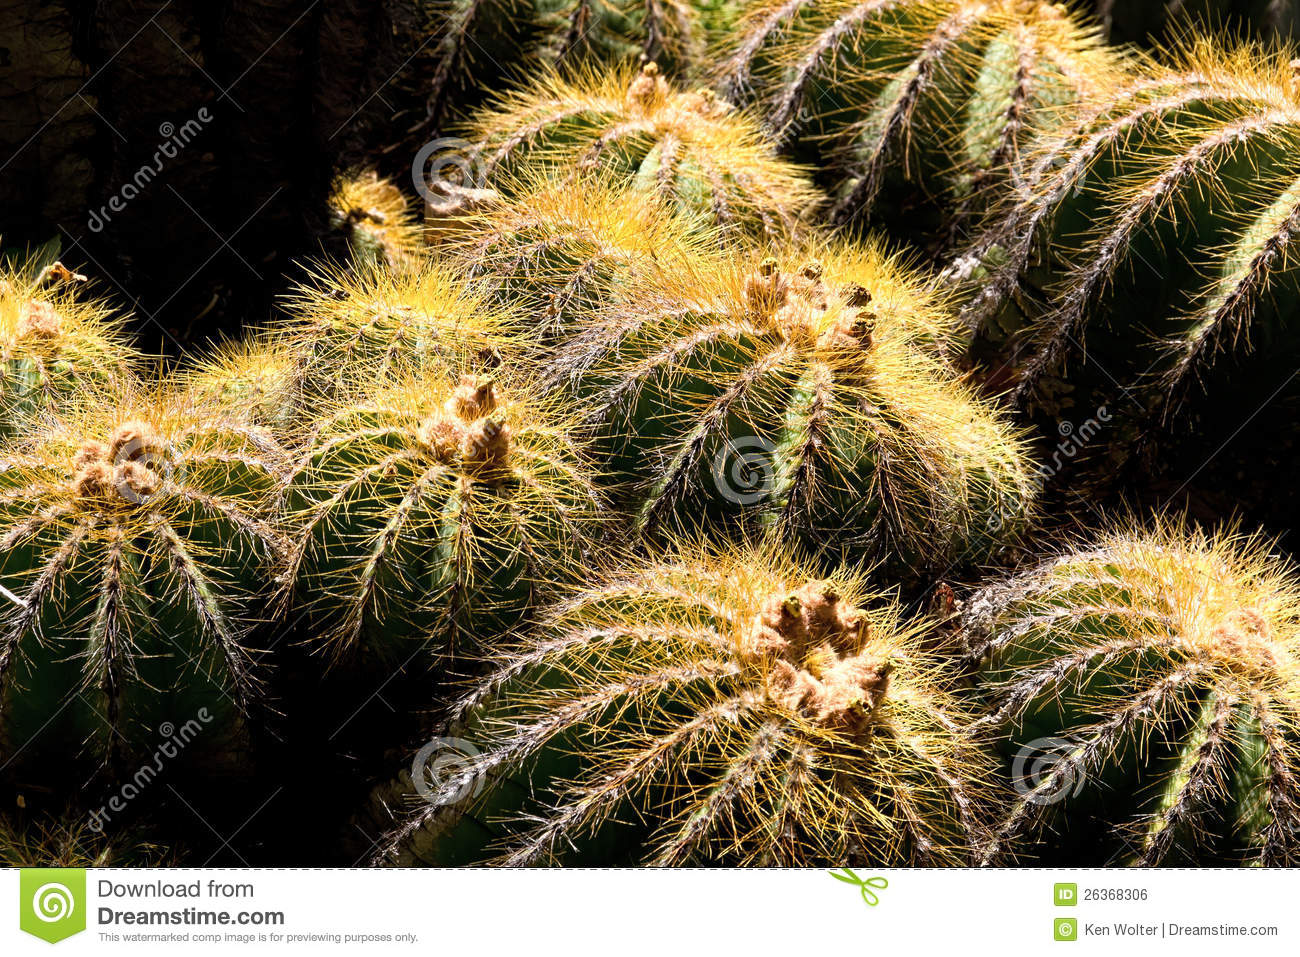 Barrel Cactus Royalty Free Stock Image   Image  26368306